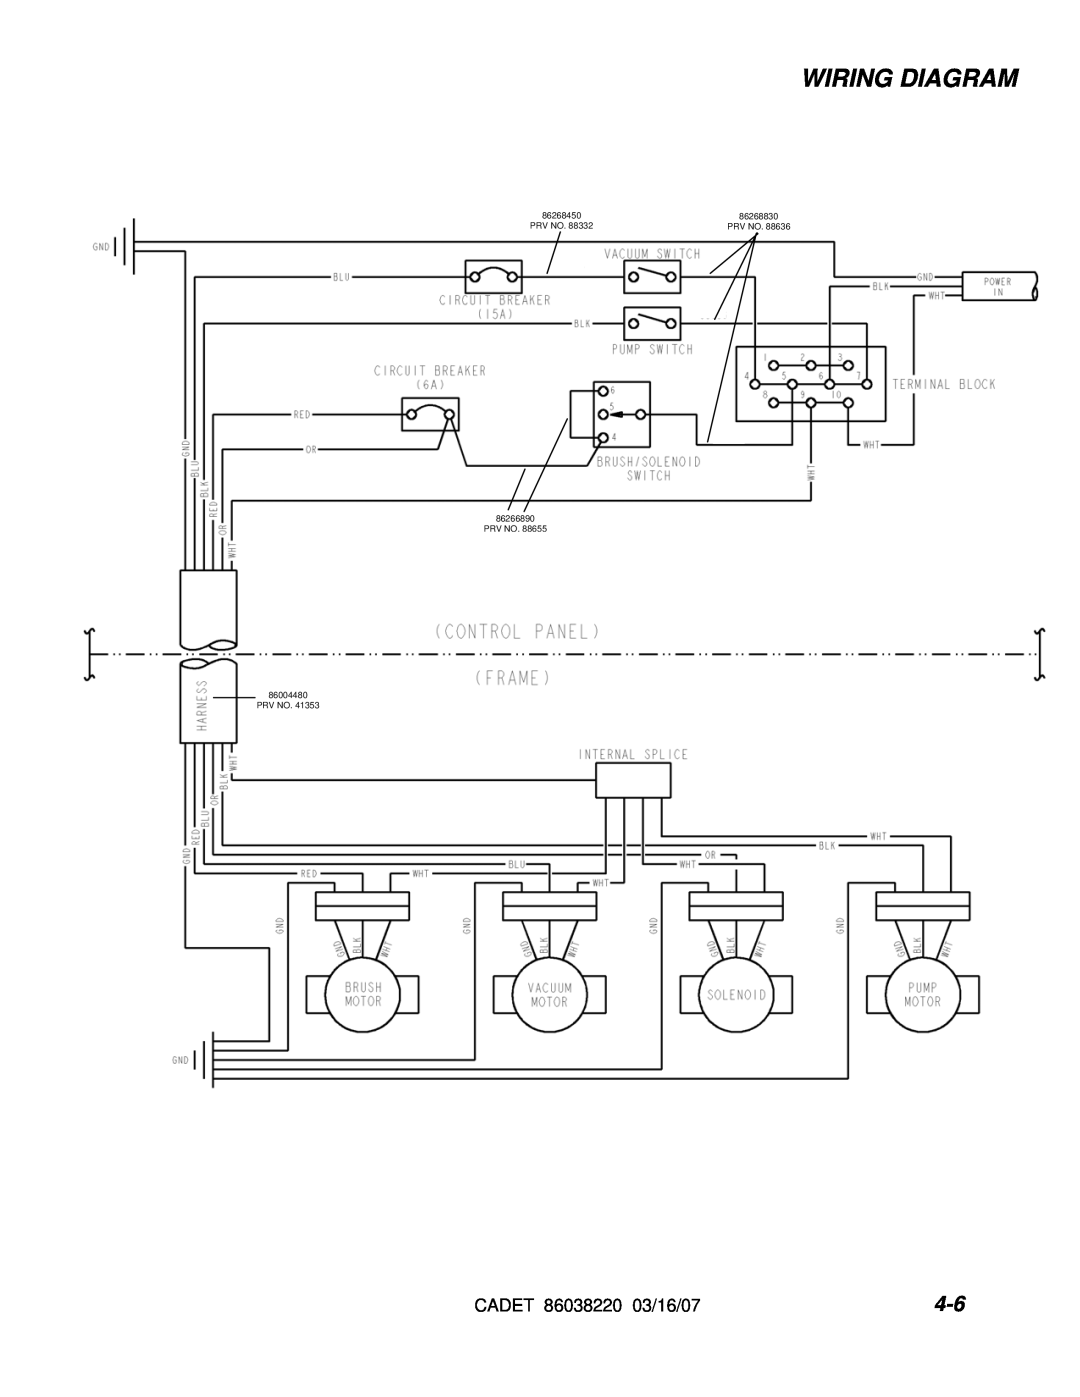 Windsor CDT7, 10080220 manual Wiring Diagram, 86268450, 86268830, PRV NO. 86004480 PRV NO, Prv No 